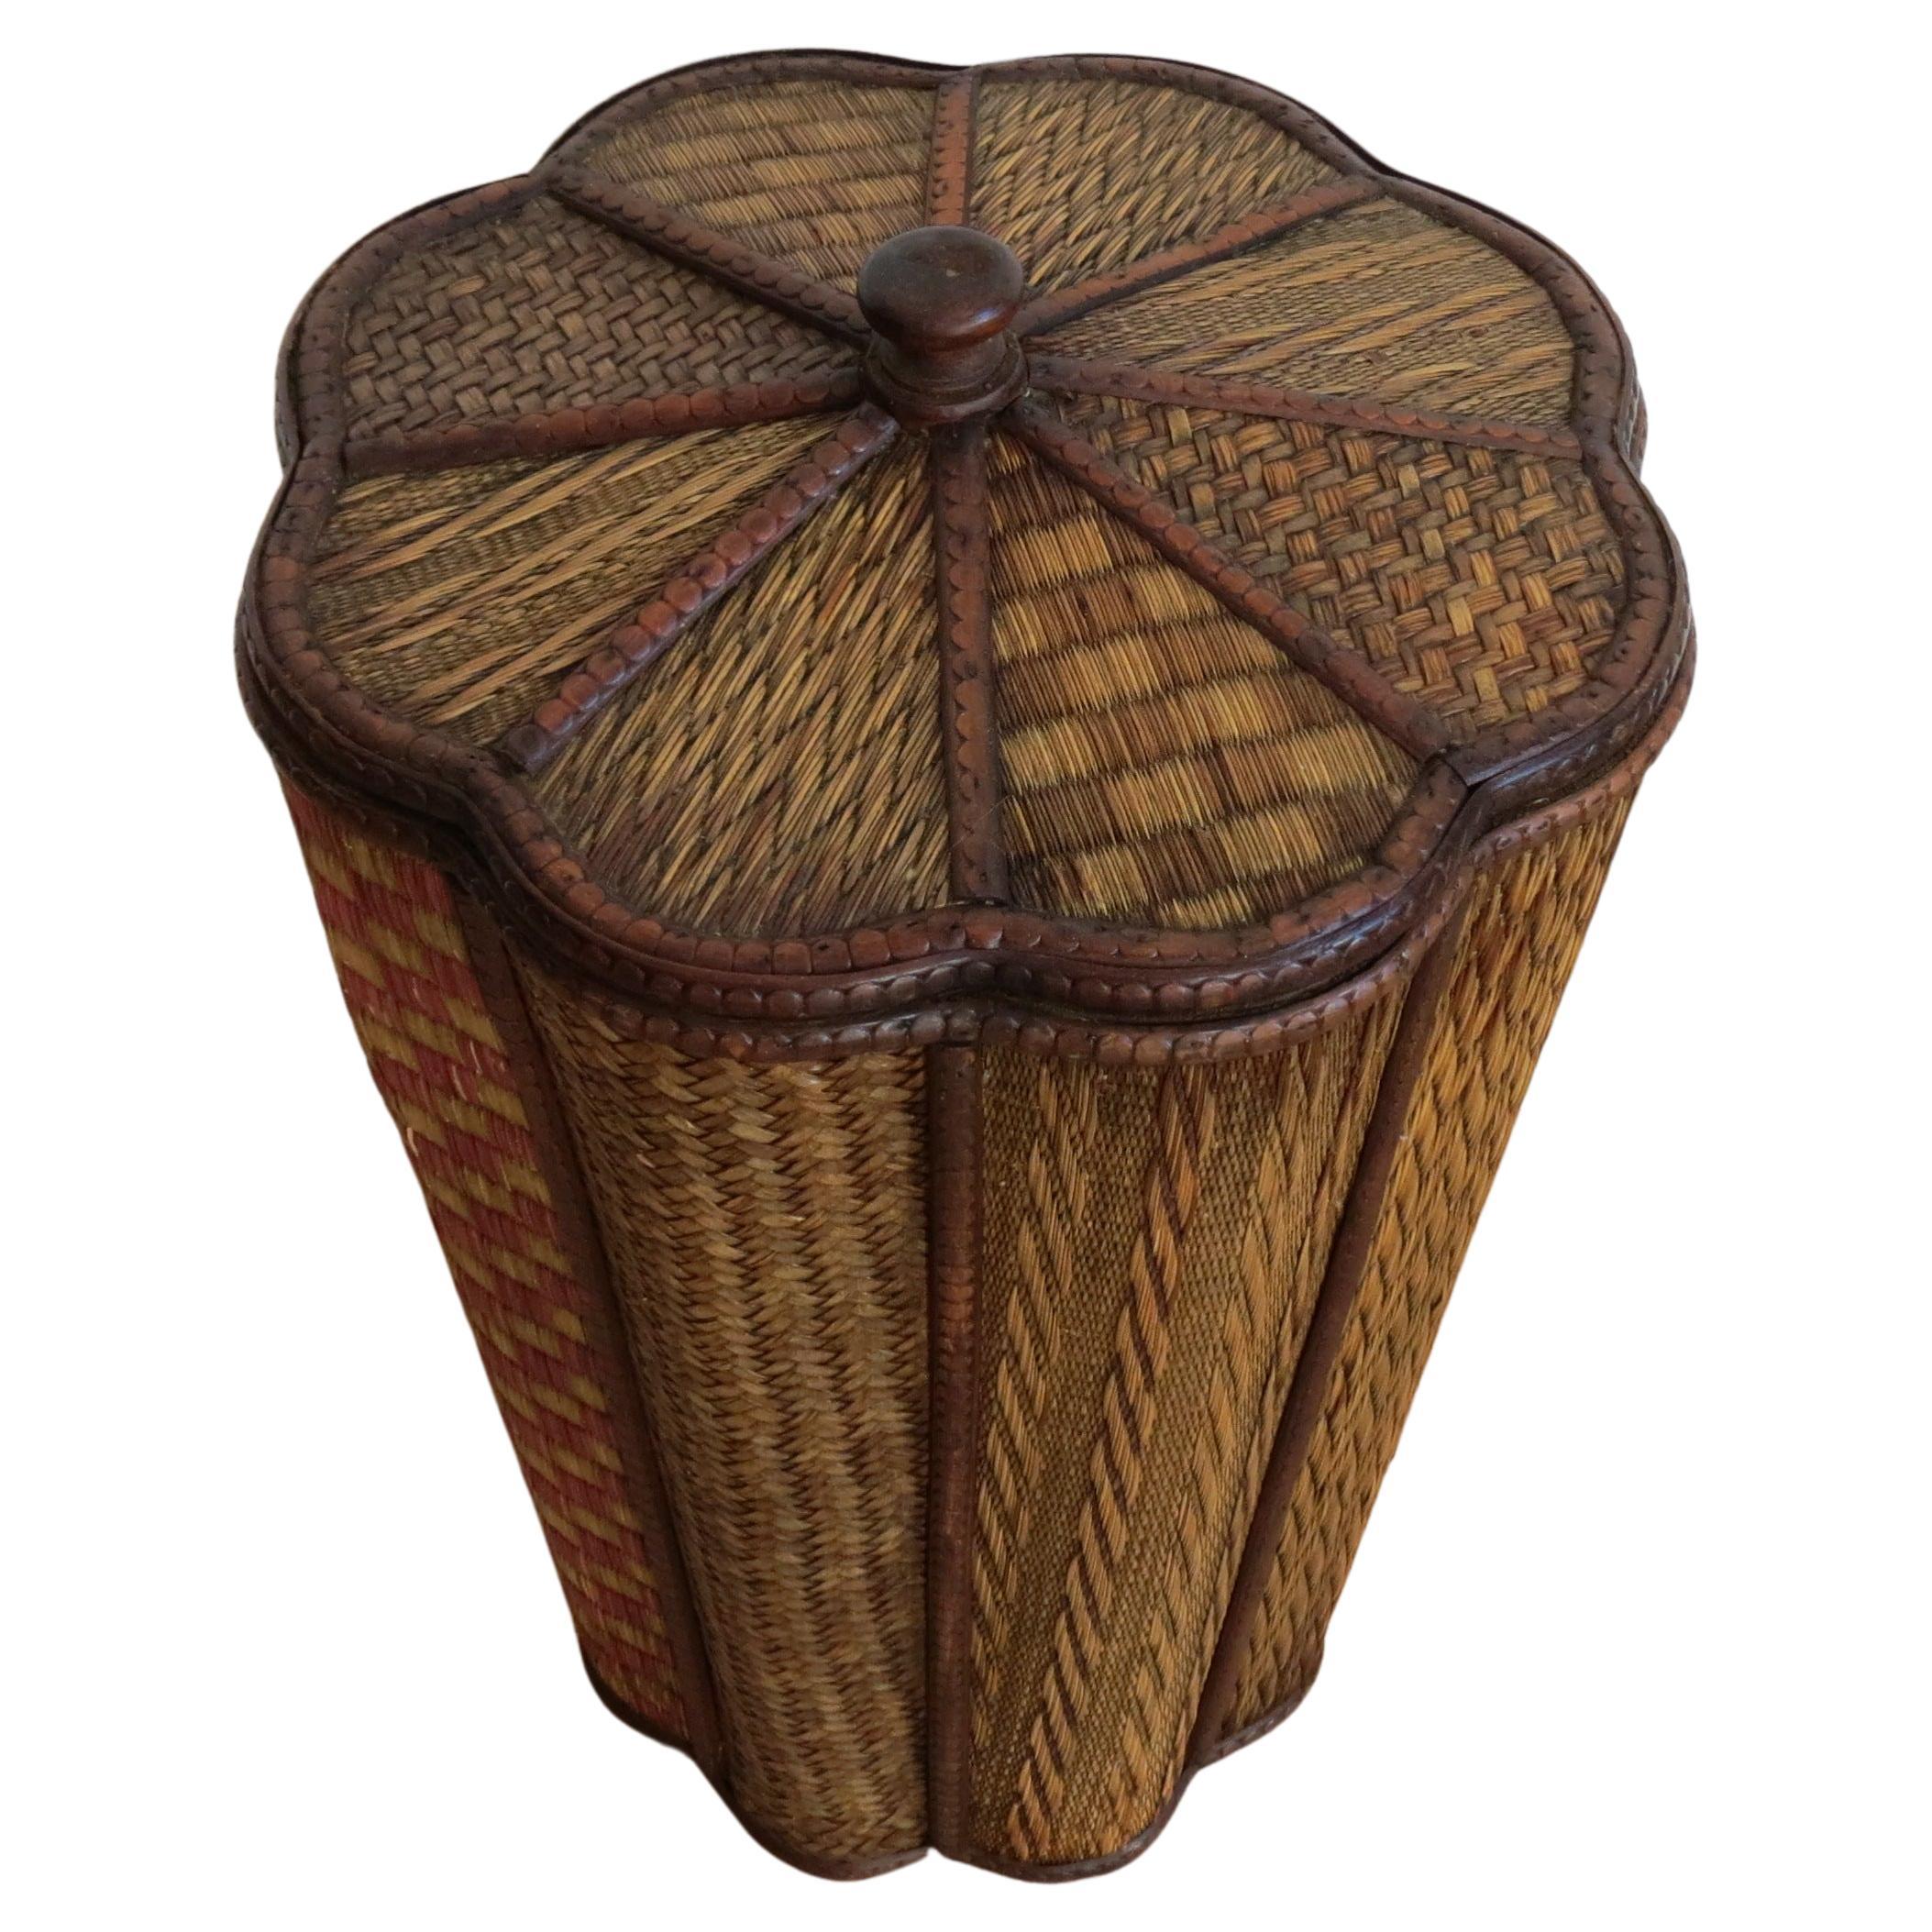 Late 19th Century Decorative Straw Work Lidded Basket Bin